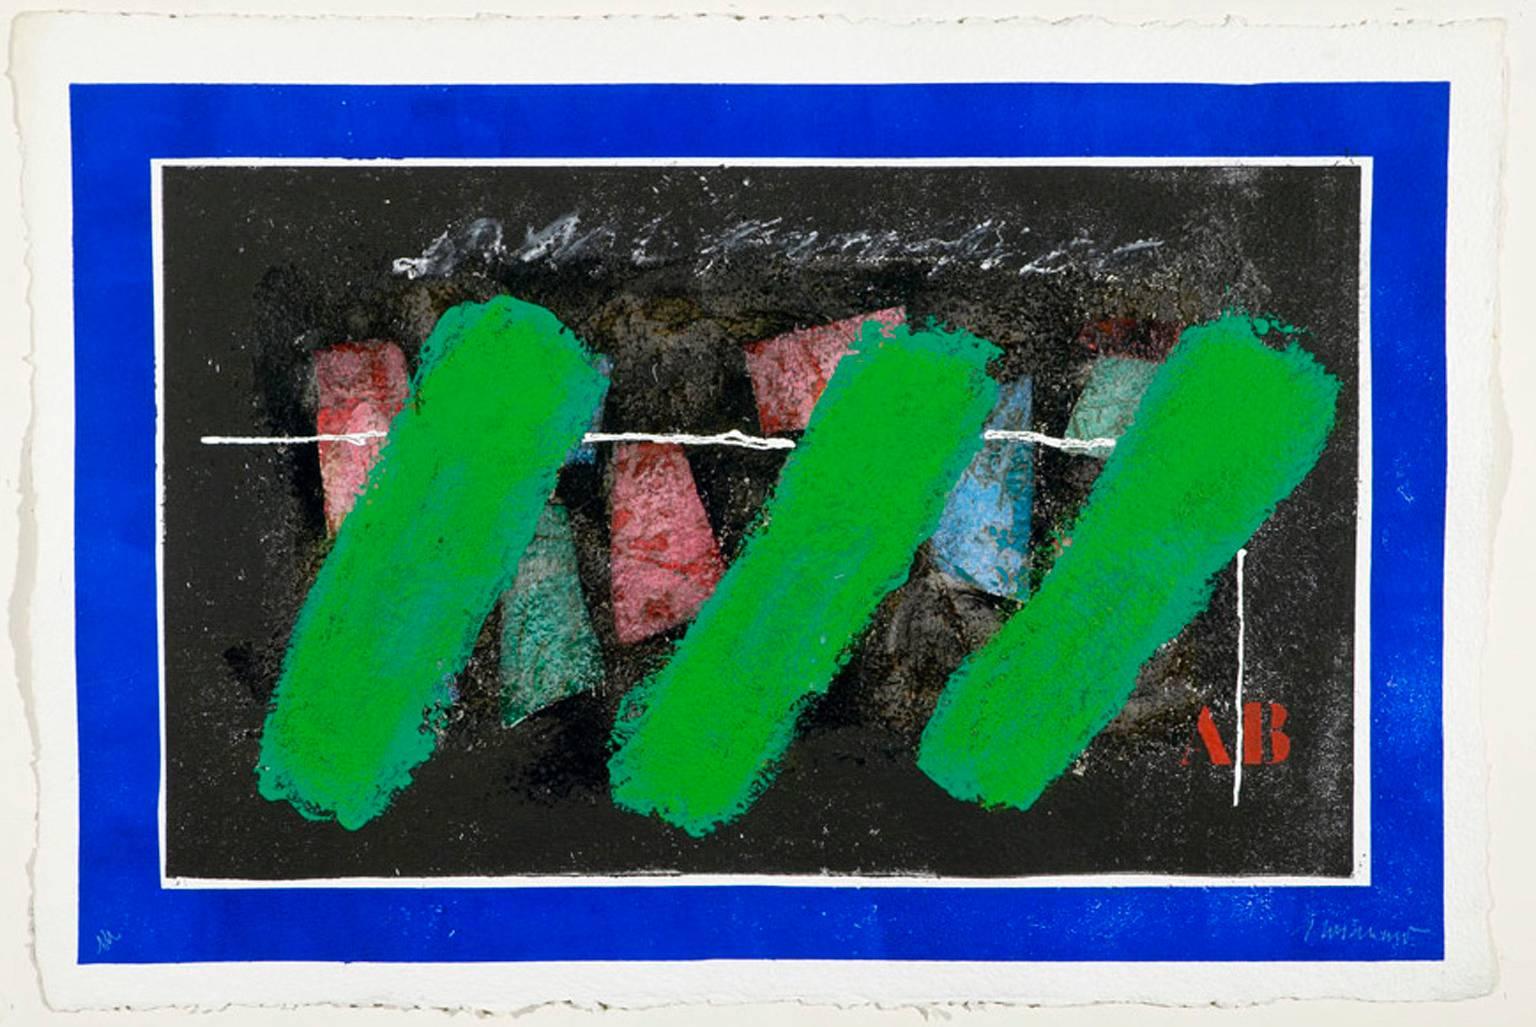 Abstract Print James Coignard - Trois verts n° 1193.